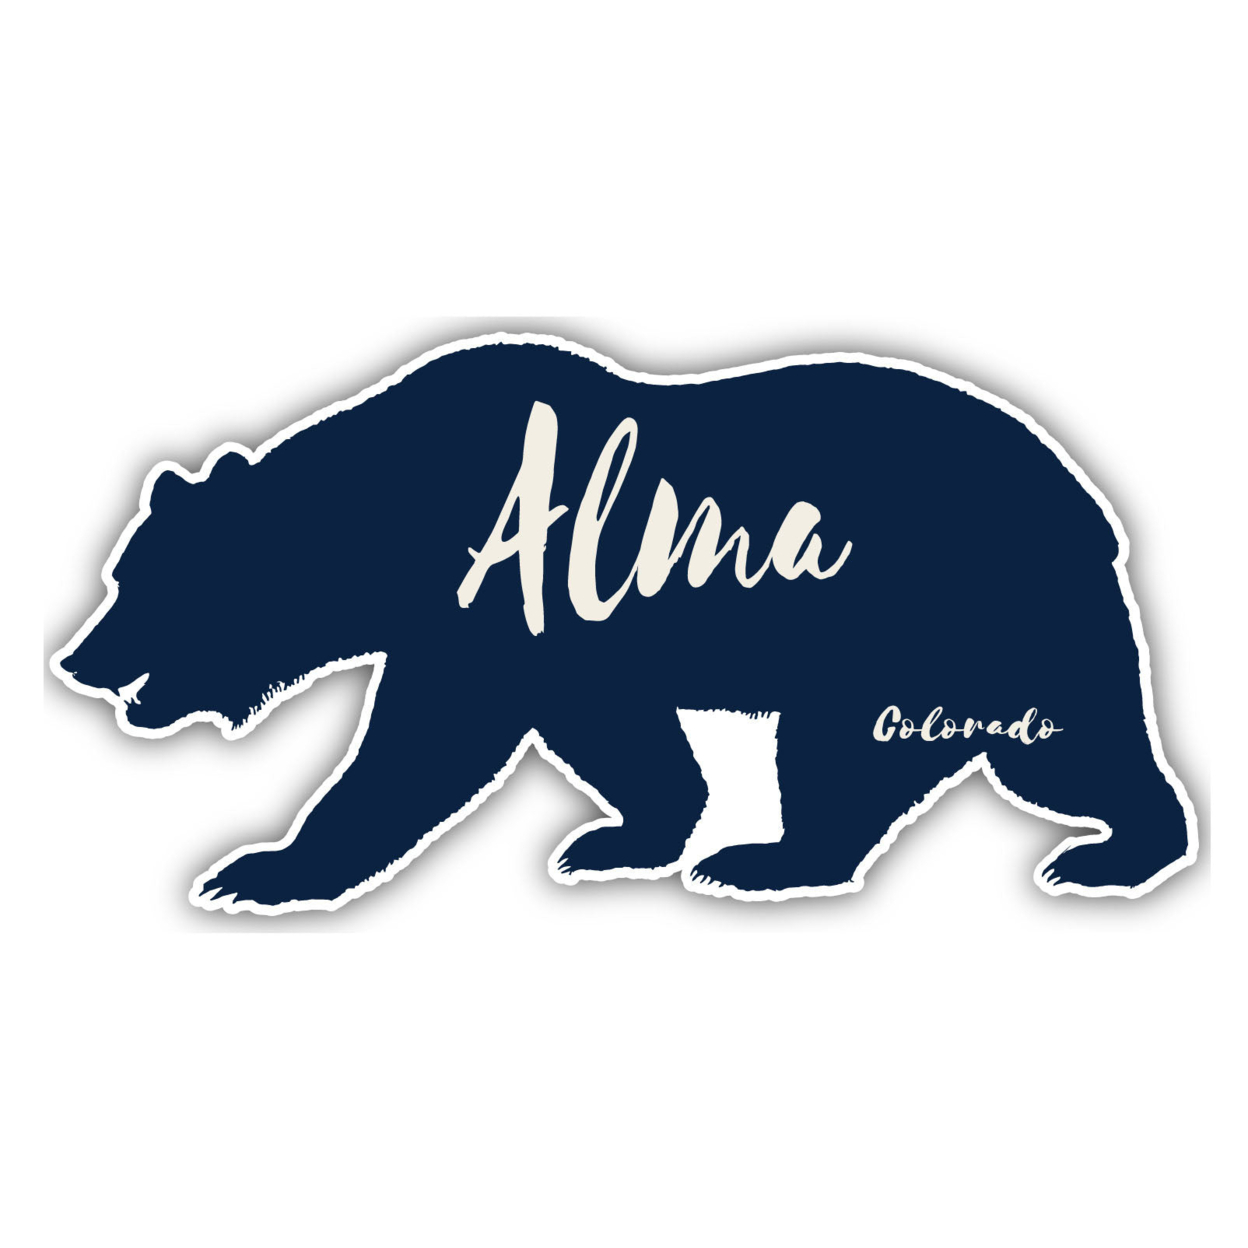 Alma Colorado Souvenir Decorative Stickers (Choose Theme And Size) - 4-Pack, 4-Inch, Adventures Awaits